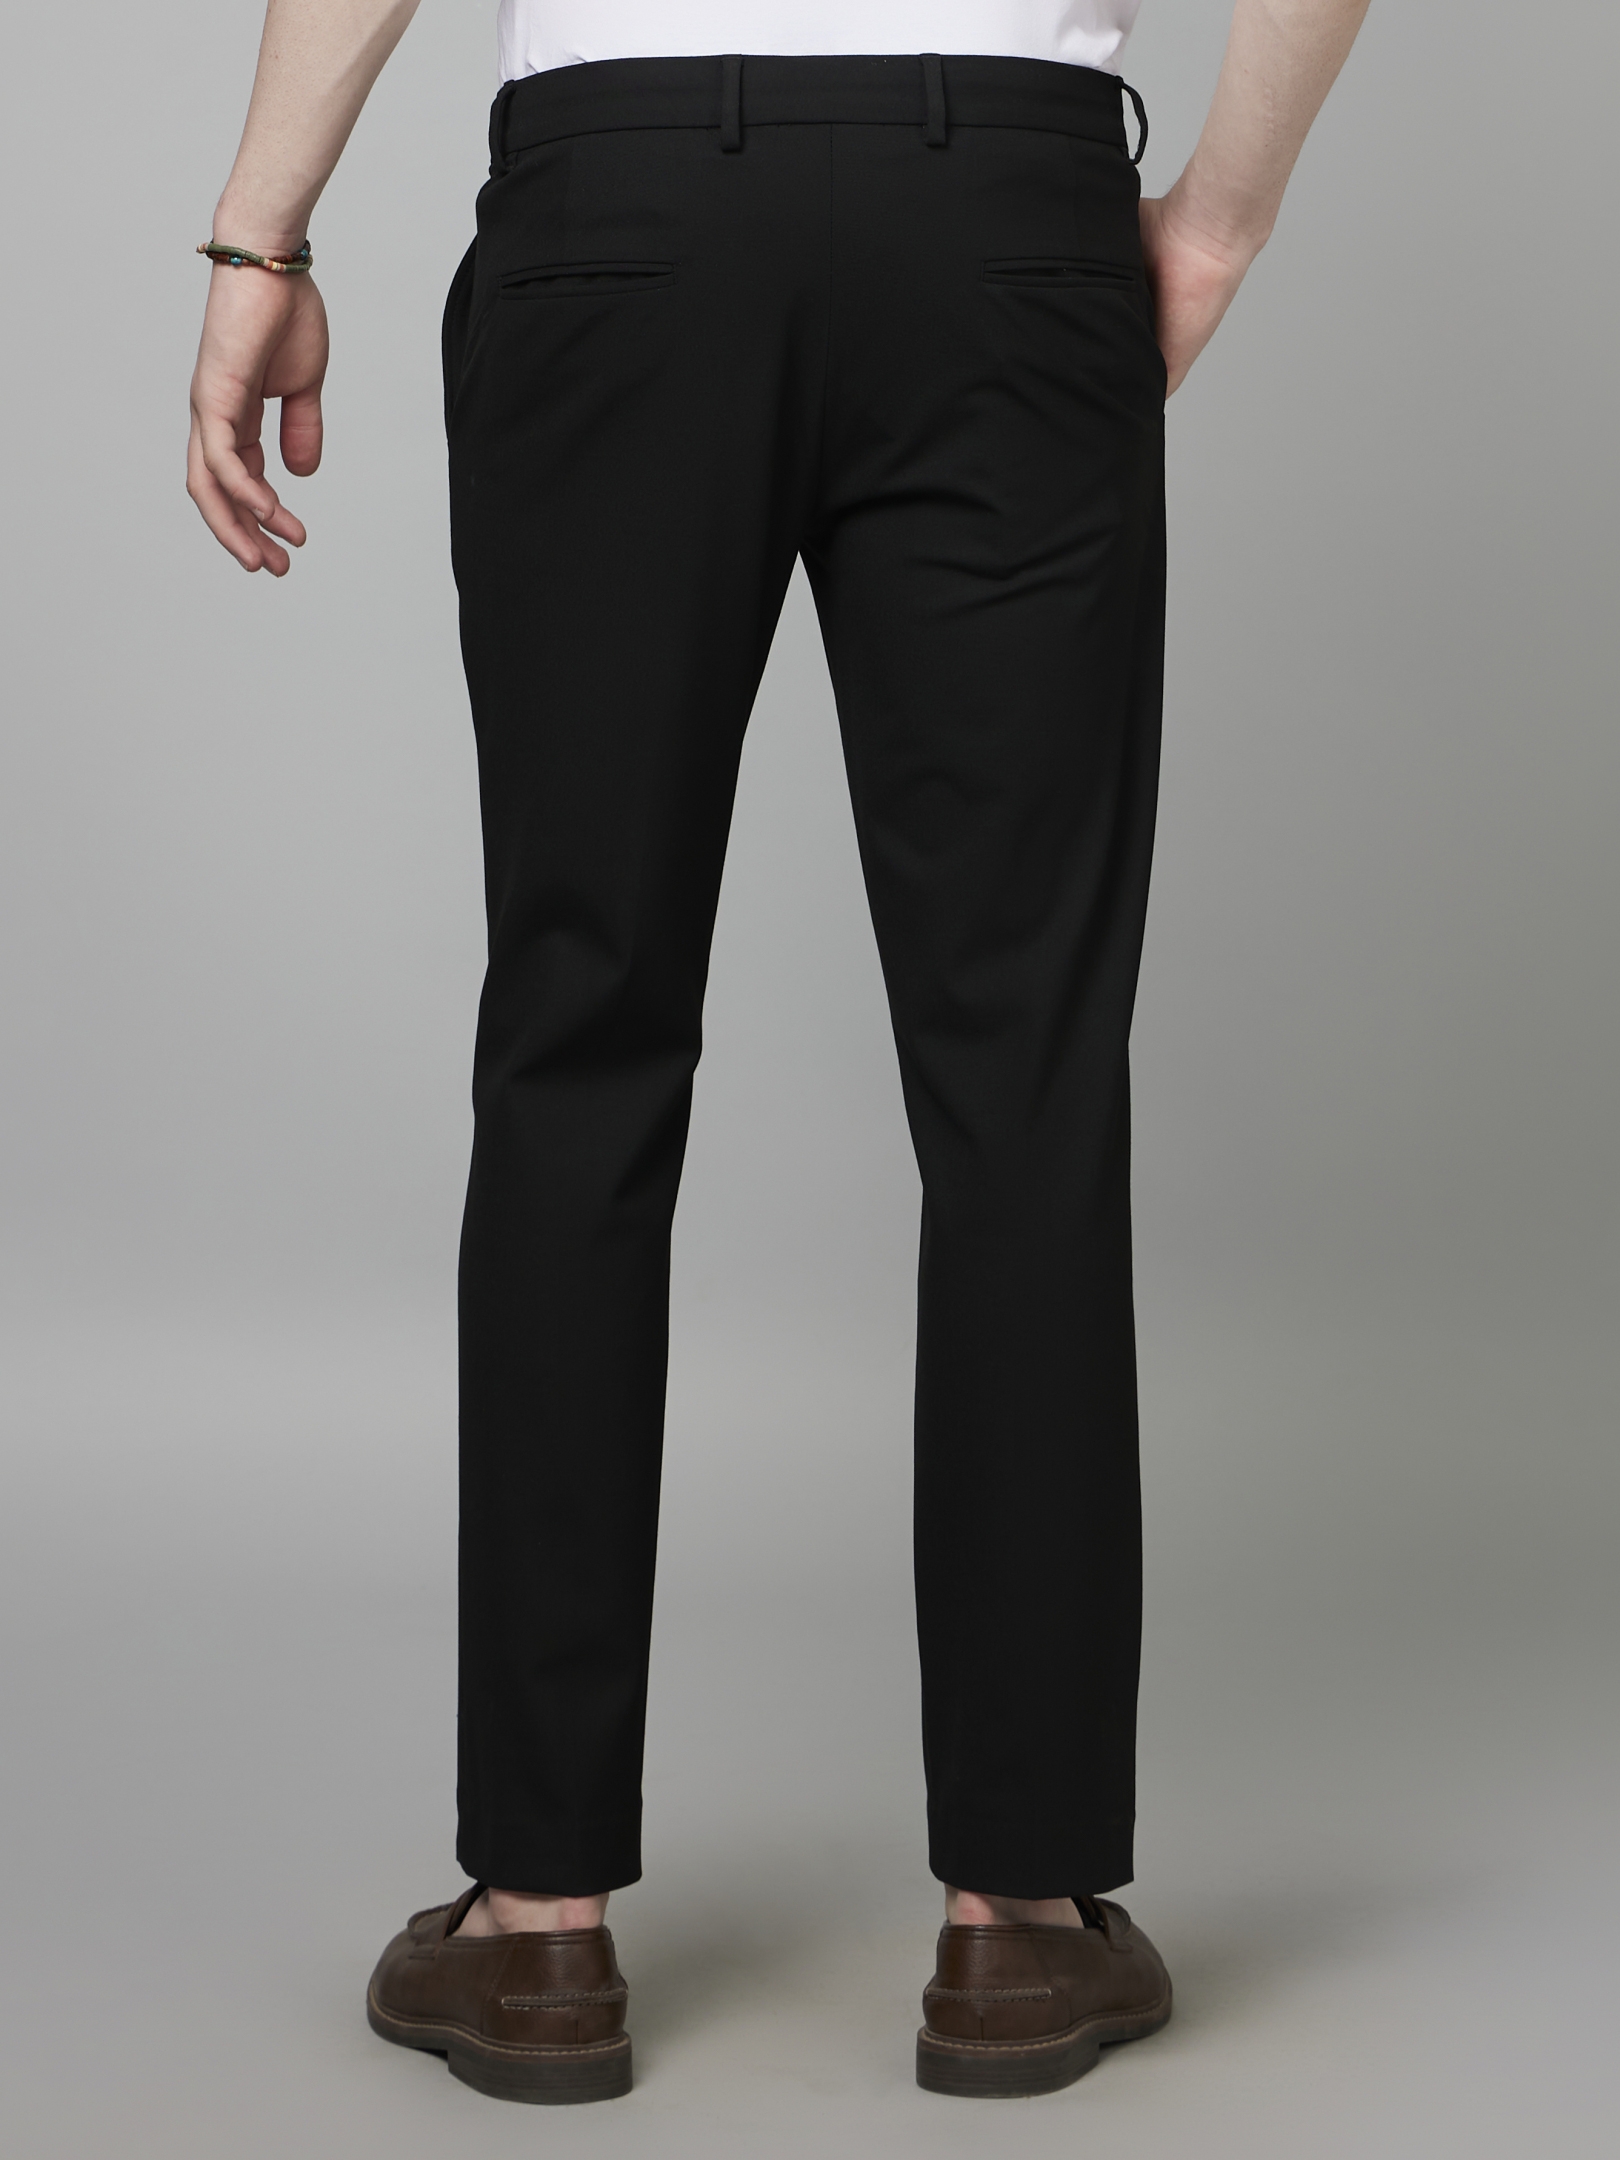 Men's Black Blended Solid Trousers